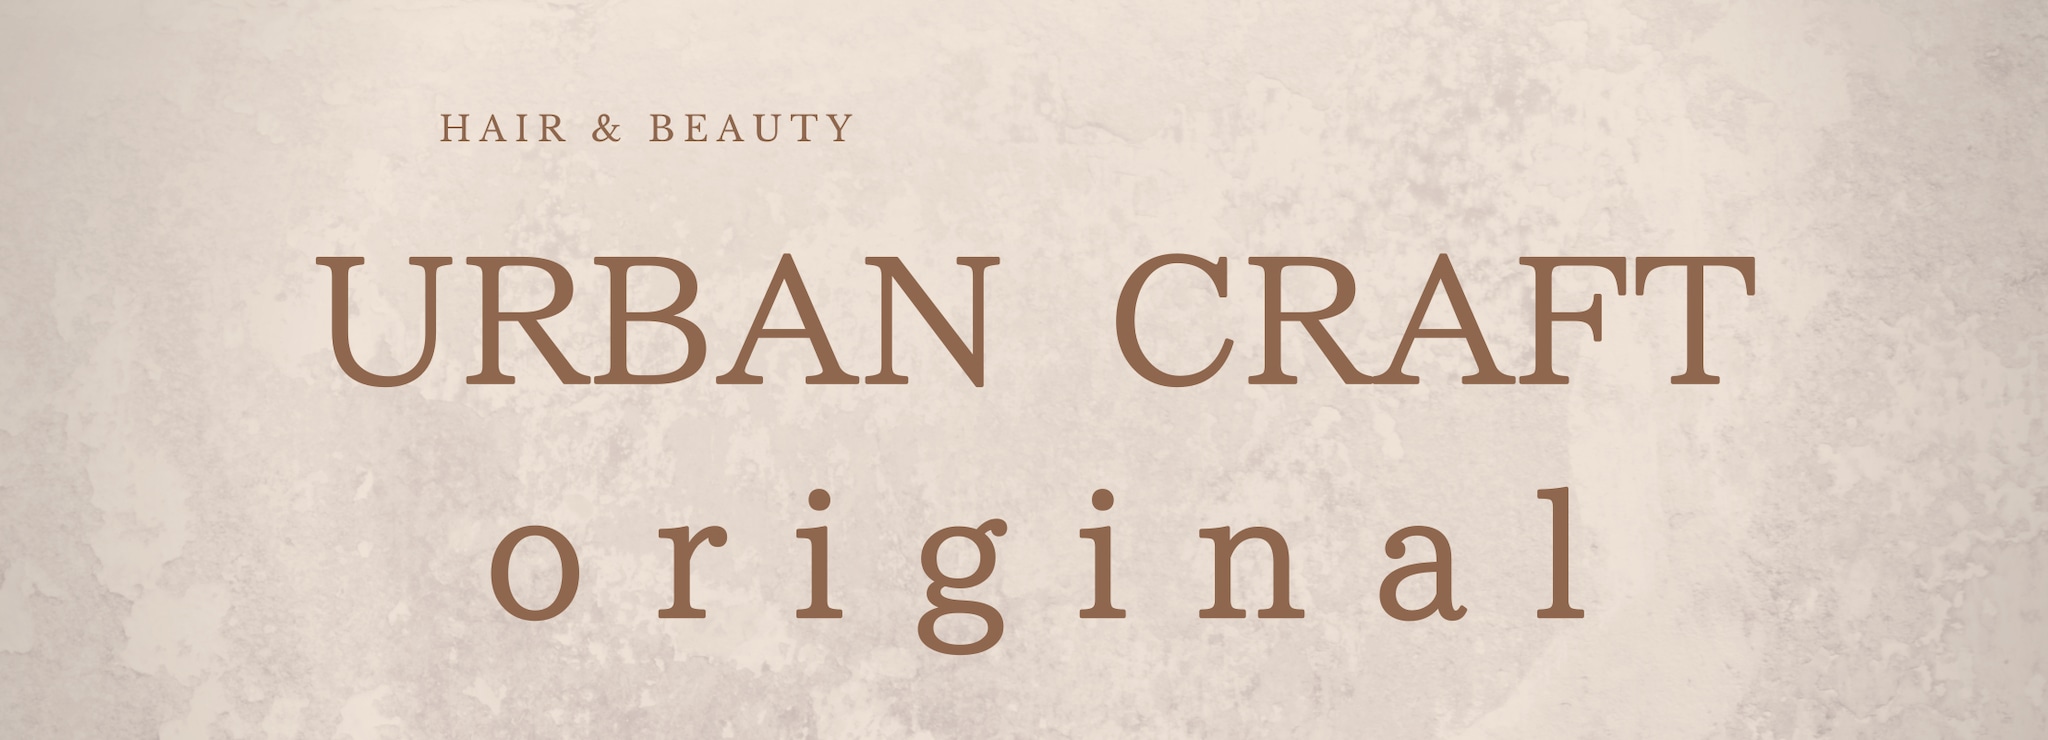 URBAN CRAFT-original